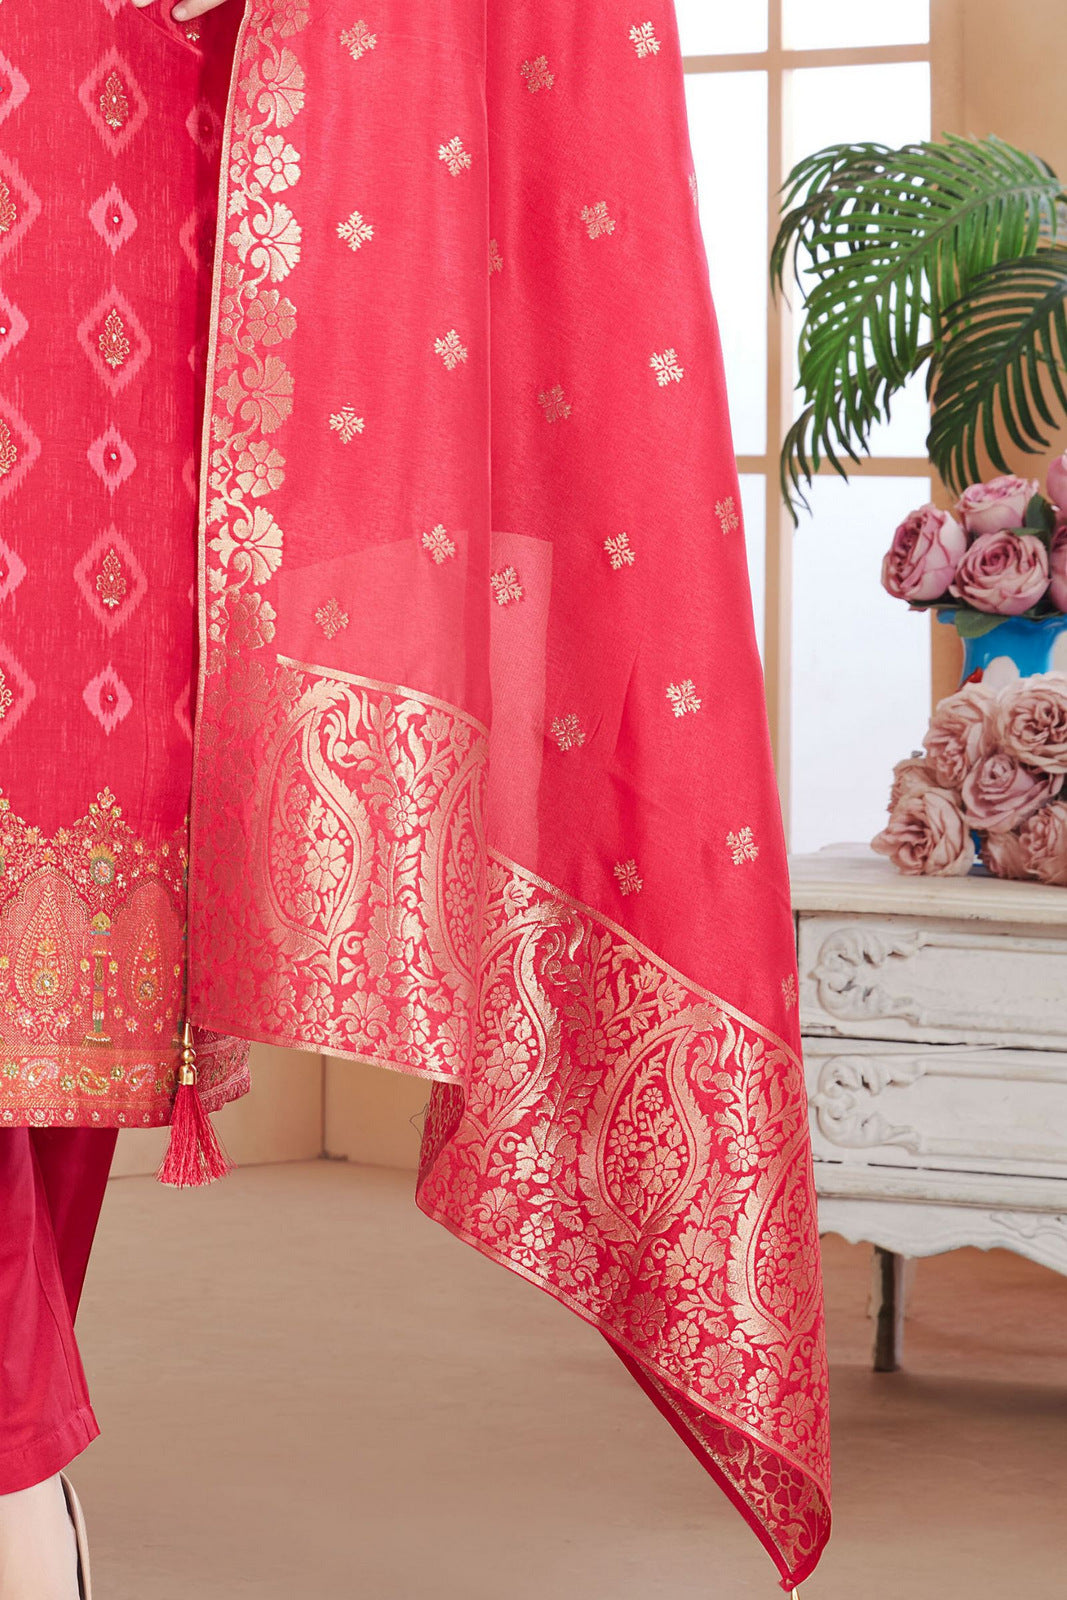 Pink Sequins, Mirror and Banaras work with Digital Print Straight Cut Salwar Suit